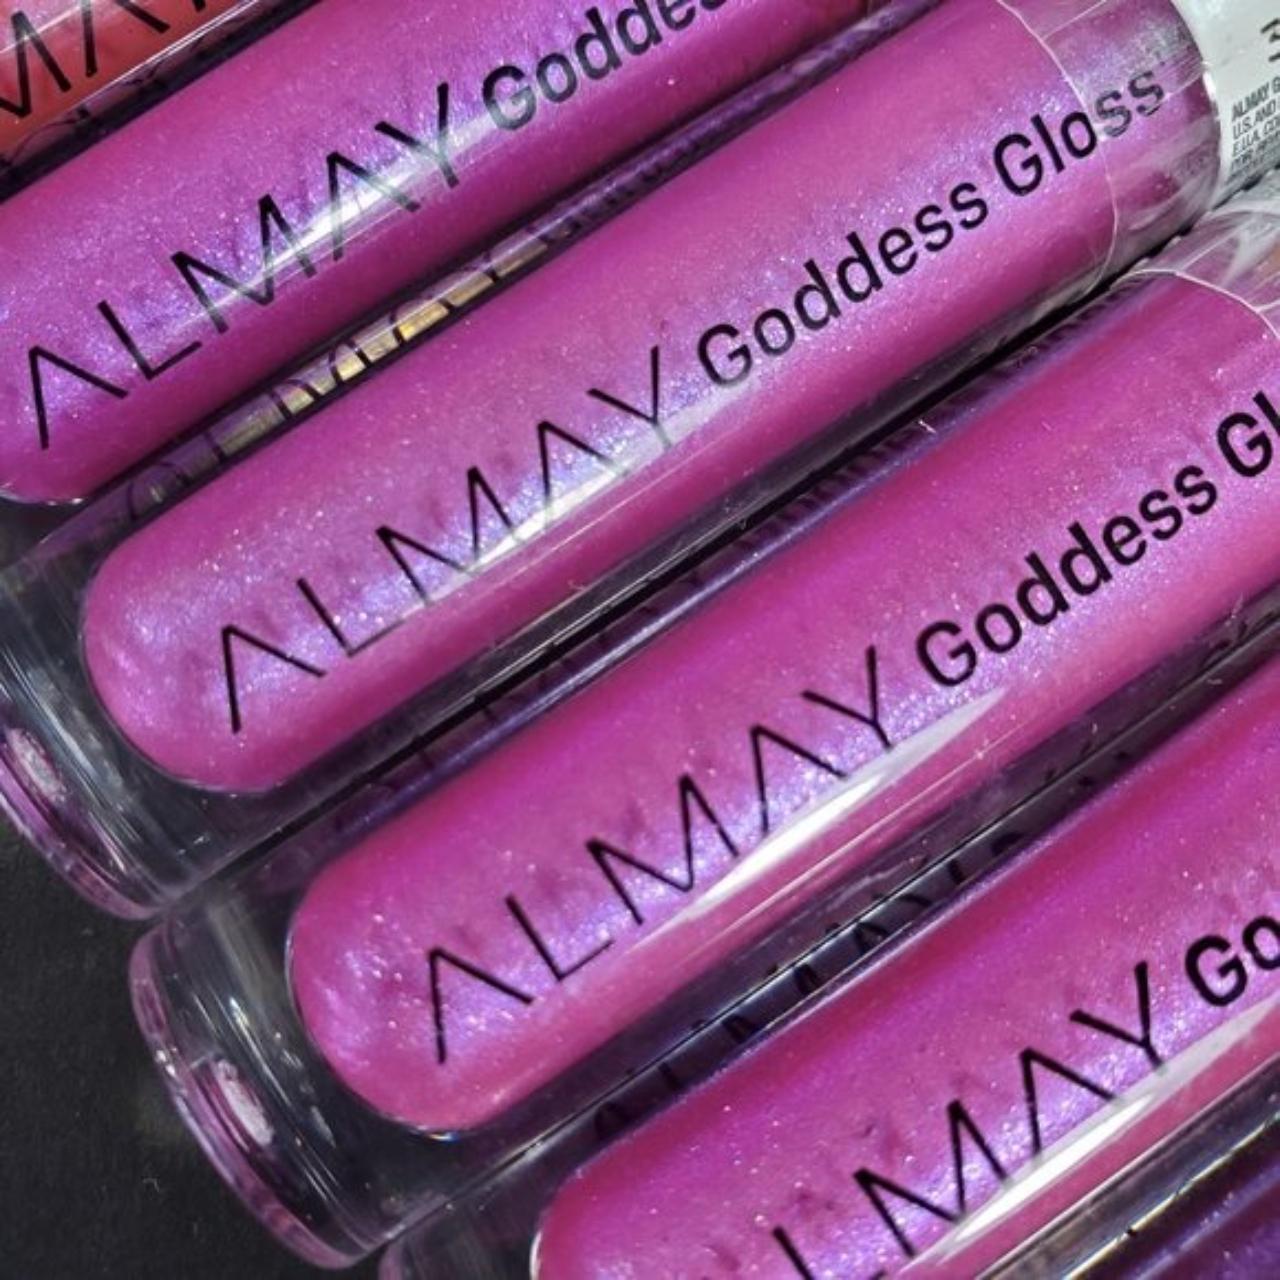 Product Image 1 - Almay Goddess Gloss Rainbow 
The